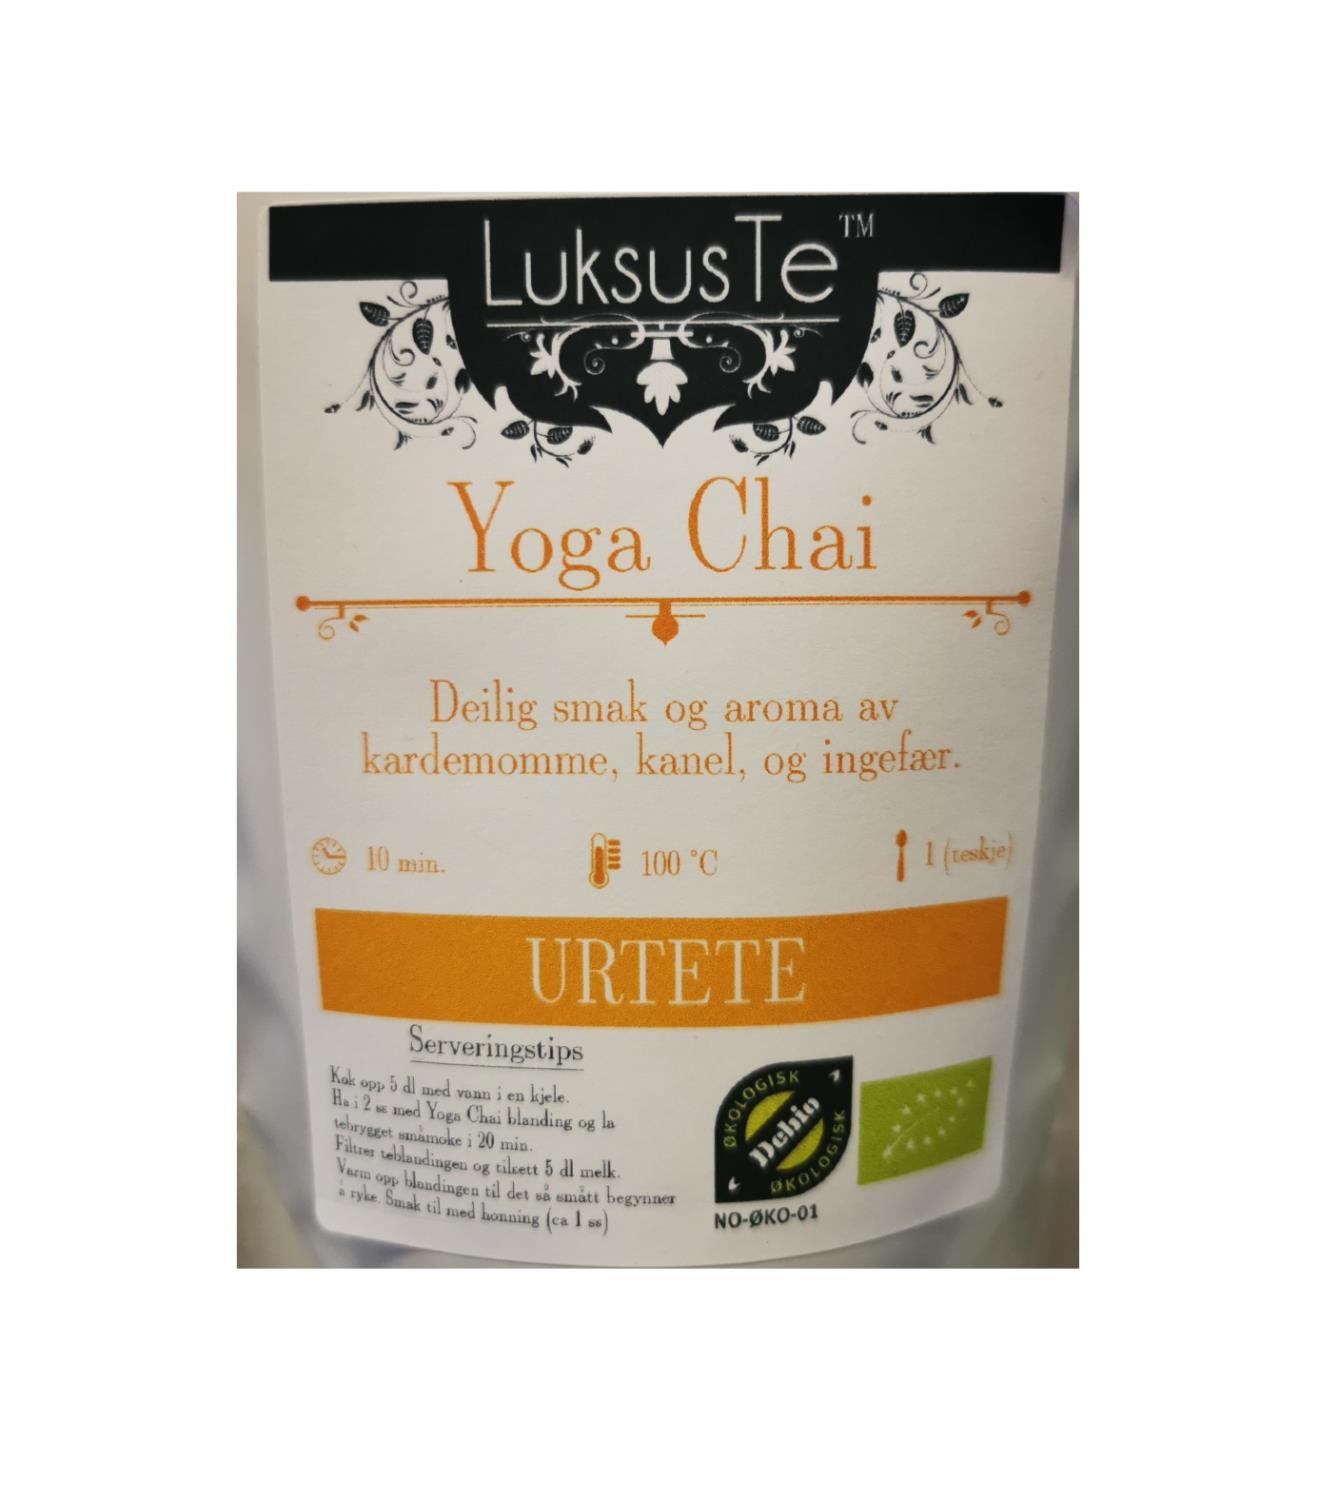 LuksusTe Yoga Chai 100g